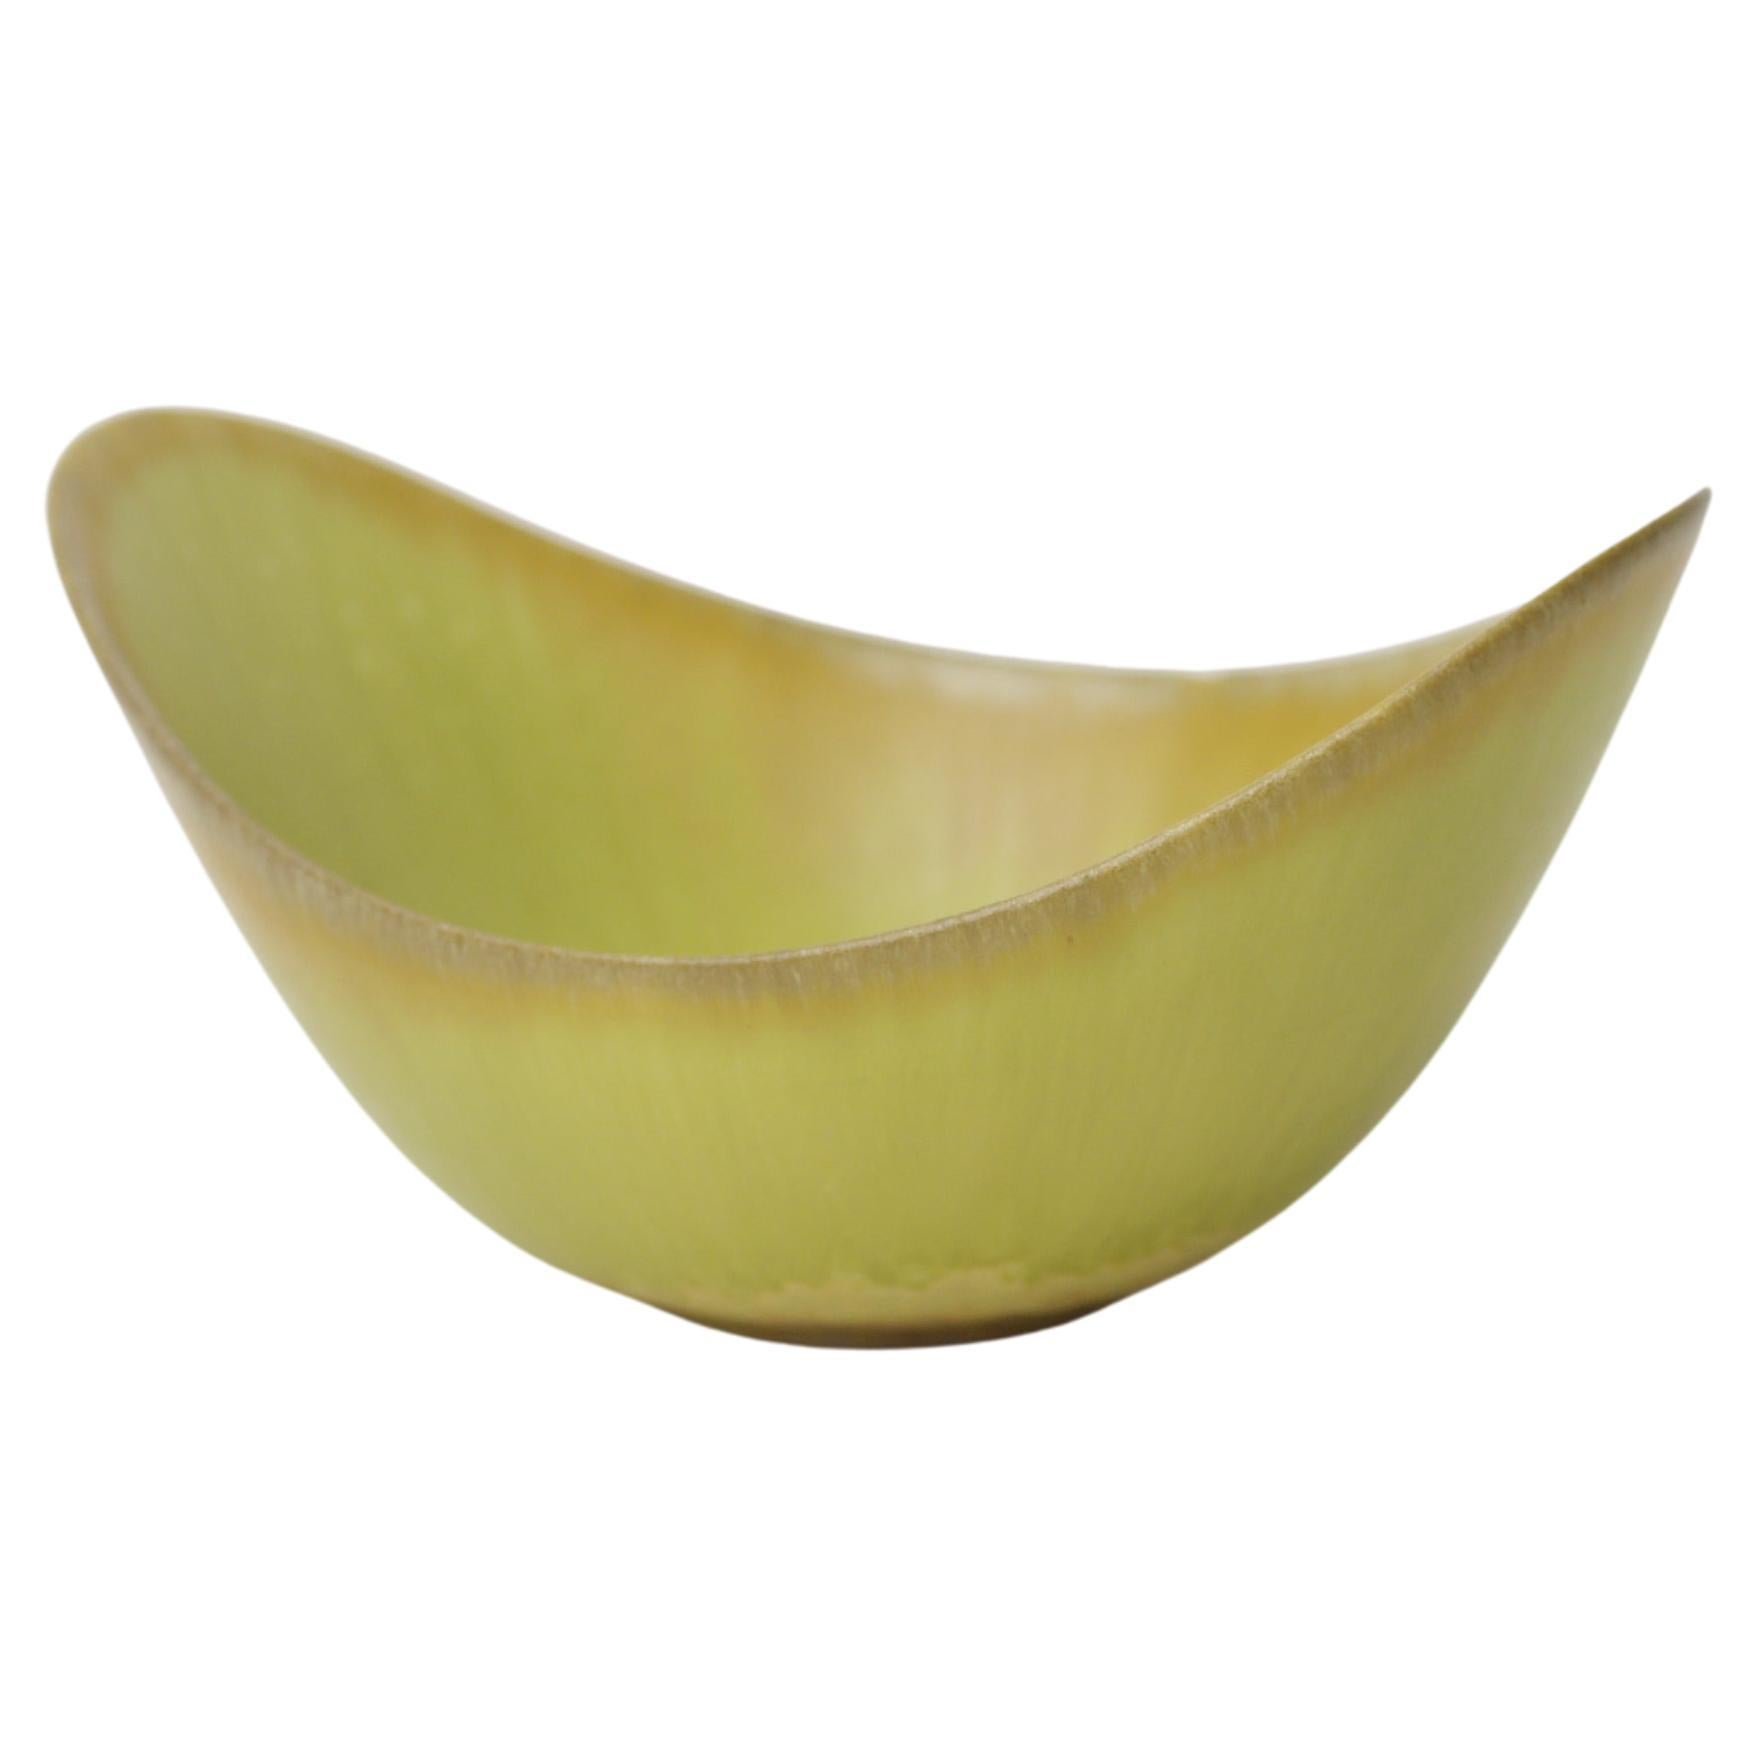 Gunnar Nylund - Small yellow bowl